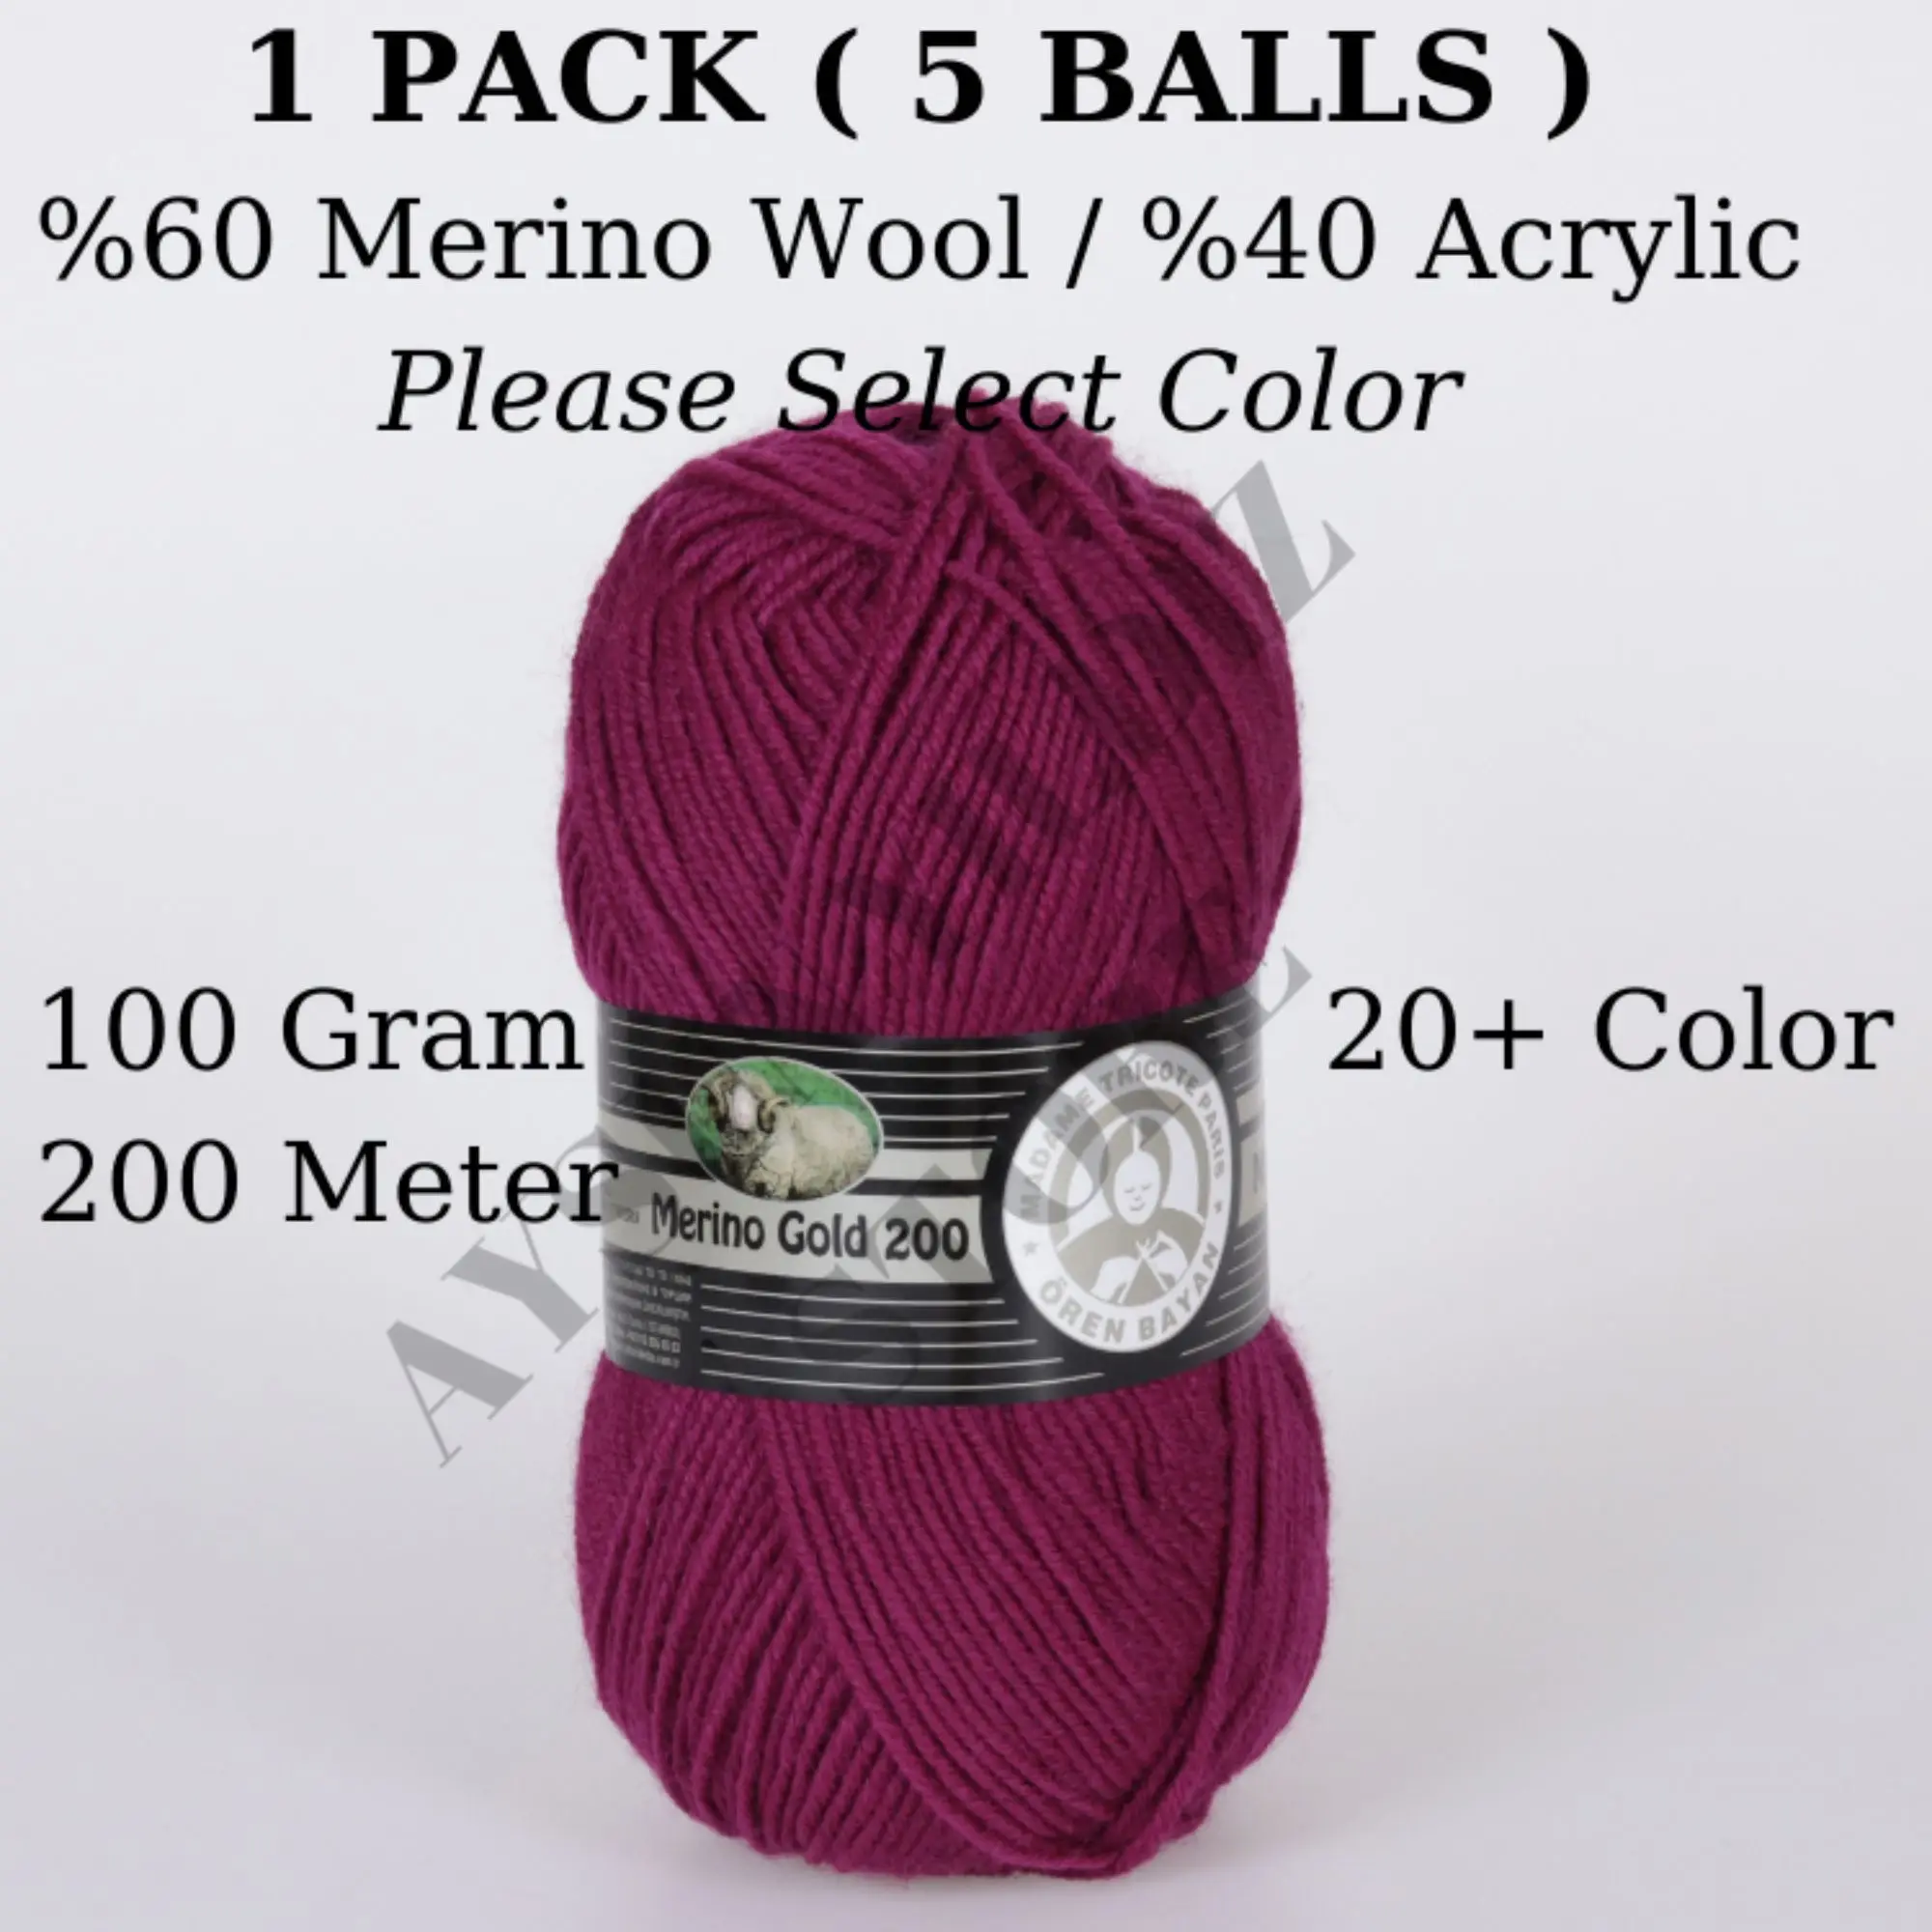 1 Pack ( 5 Balls ) Madame Tricote Paris ( Oren Bayan ) Merino Gold 200  Hand Knitting  Yarn  Crochet Tool Kit Cardigan  Sweater